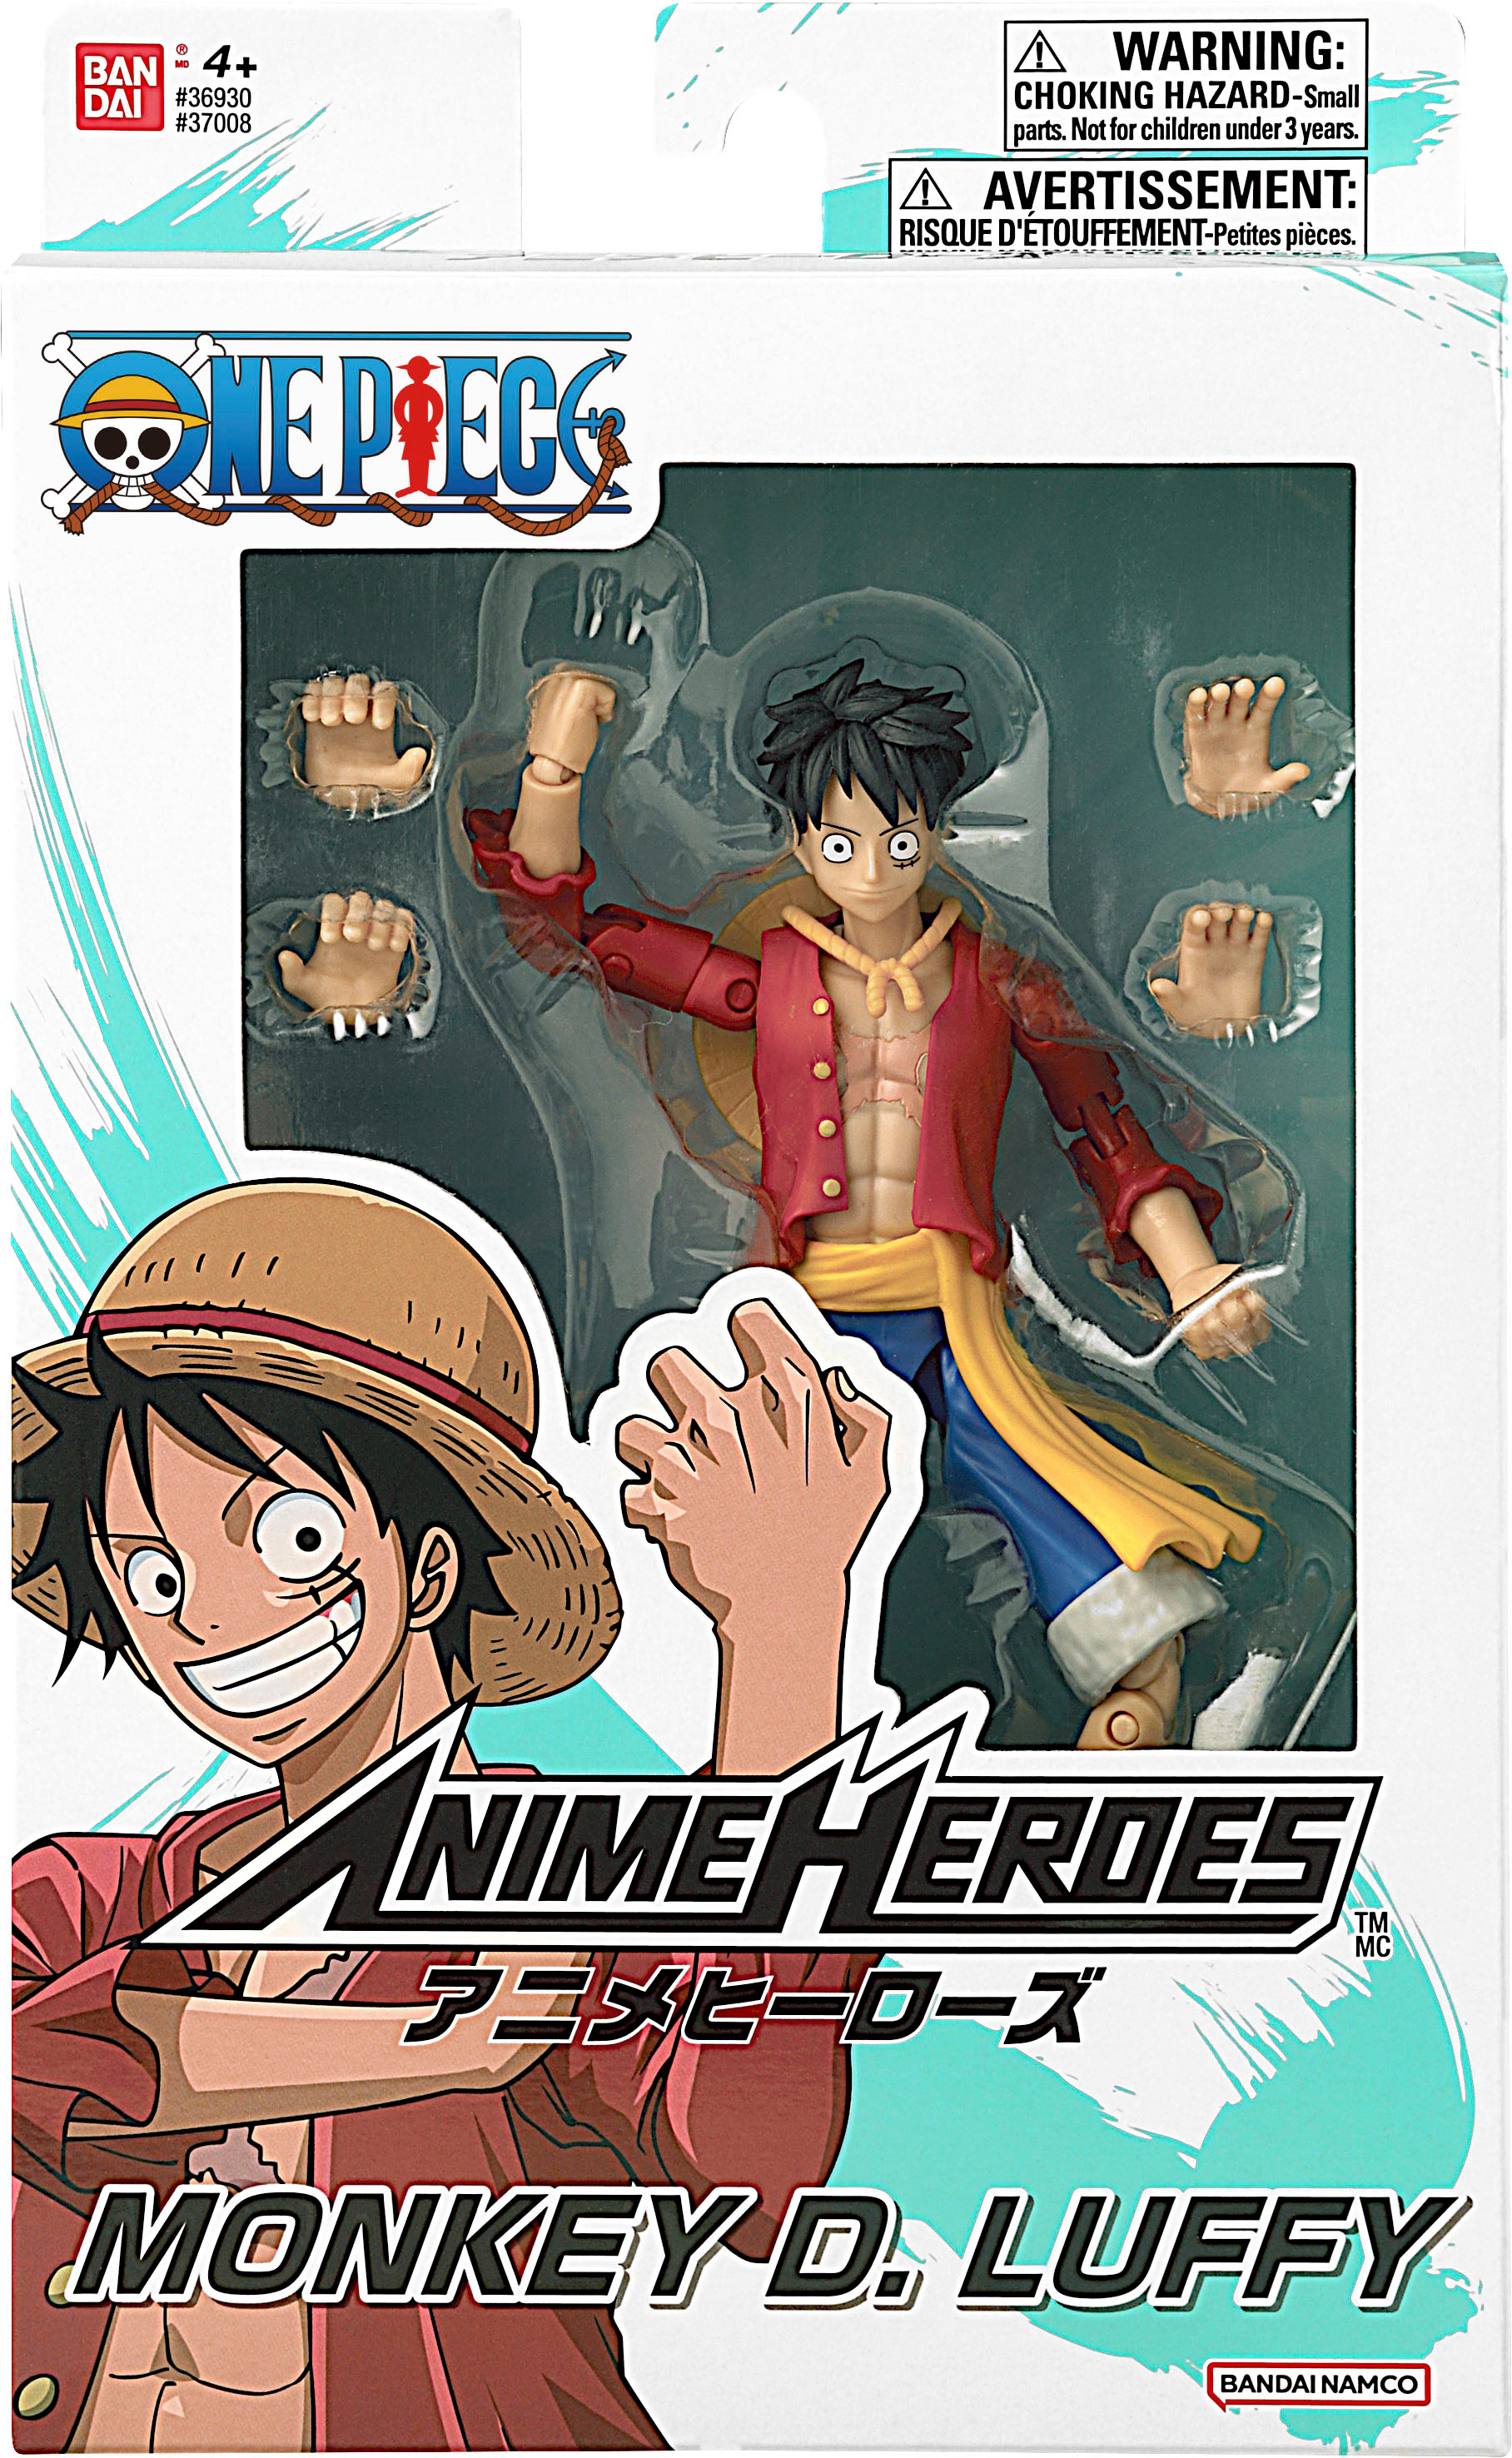 Bandai - Anime Heroes One Piece Sanji Figure - Millennia